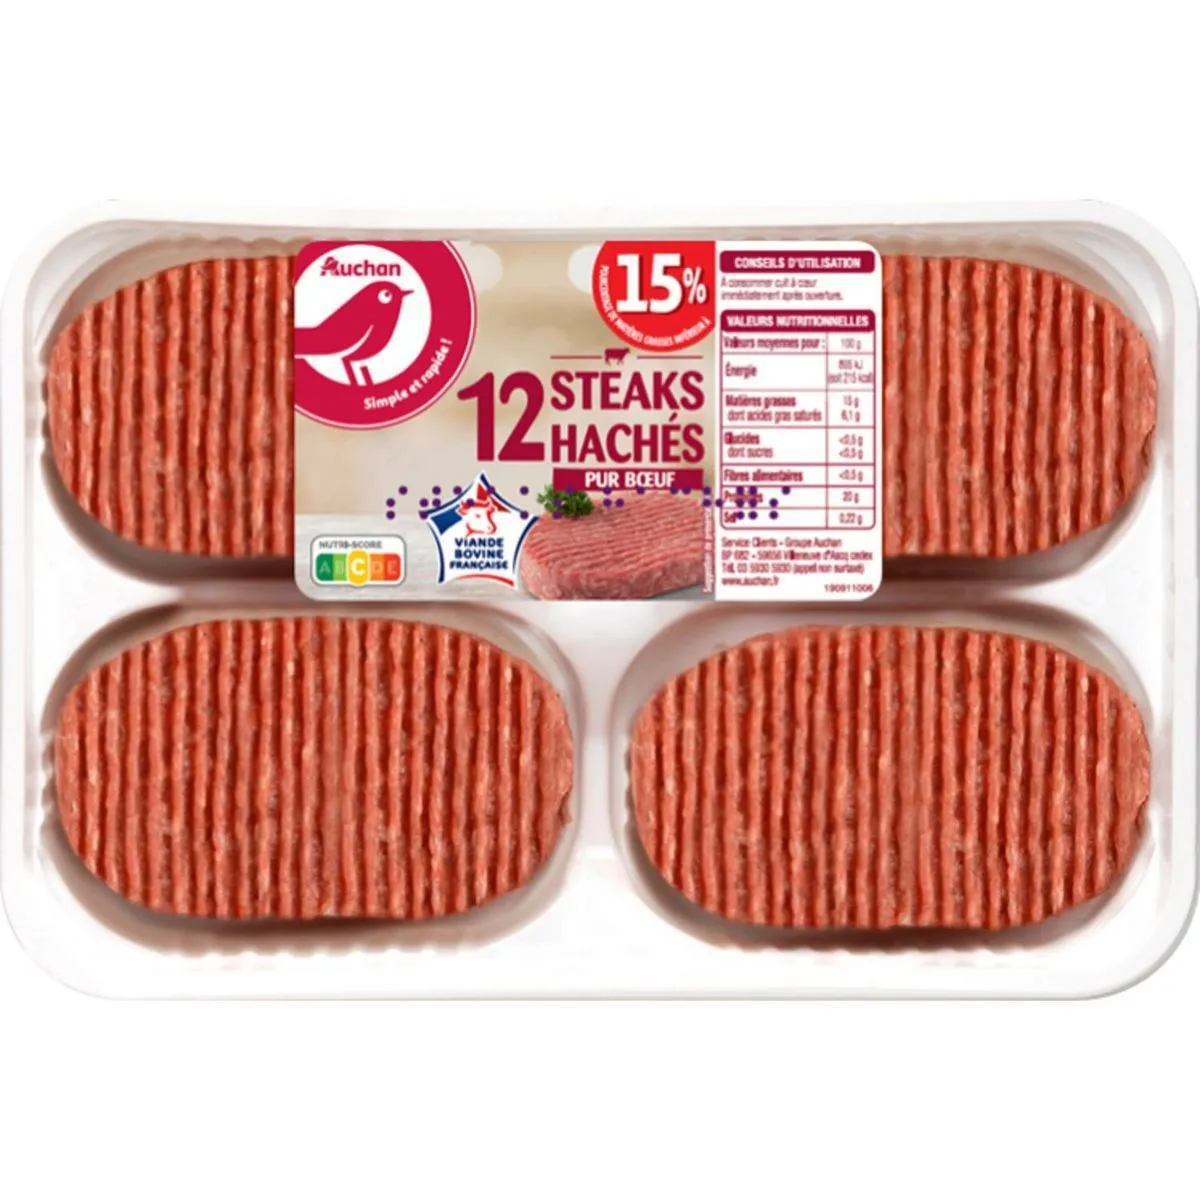 12 steaks hachés pur boeuf auchan(1)